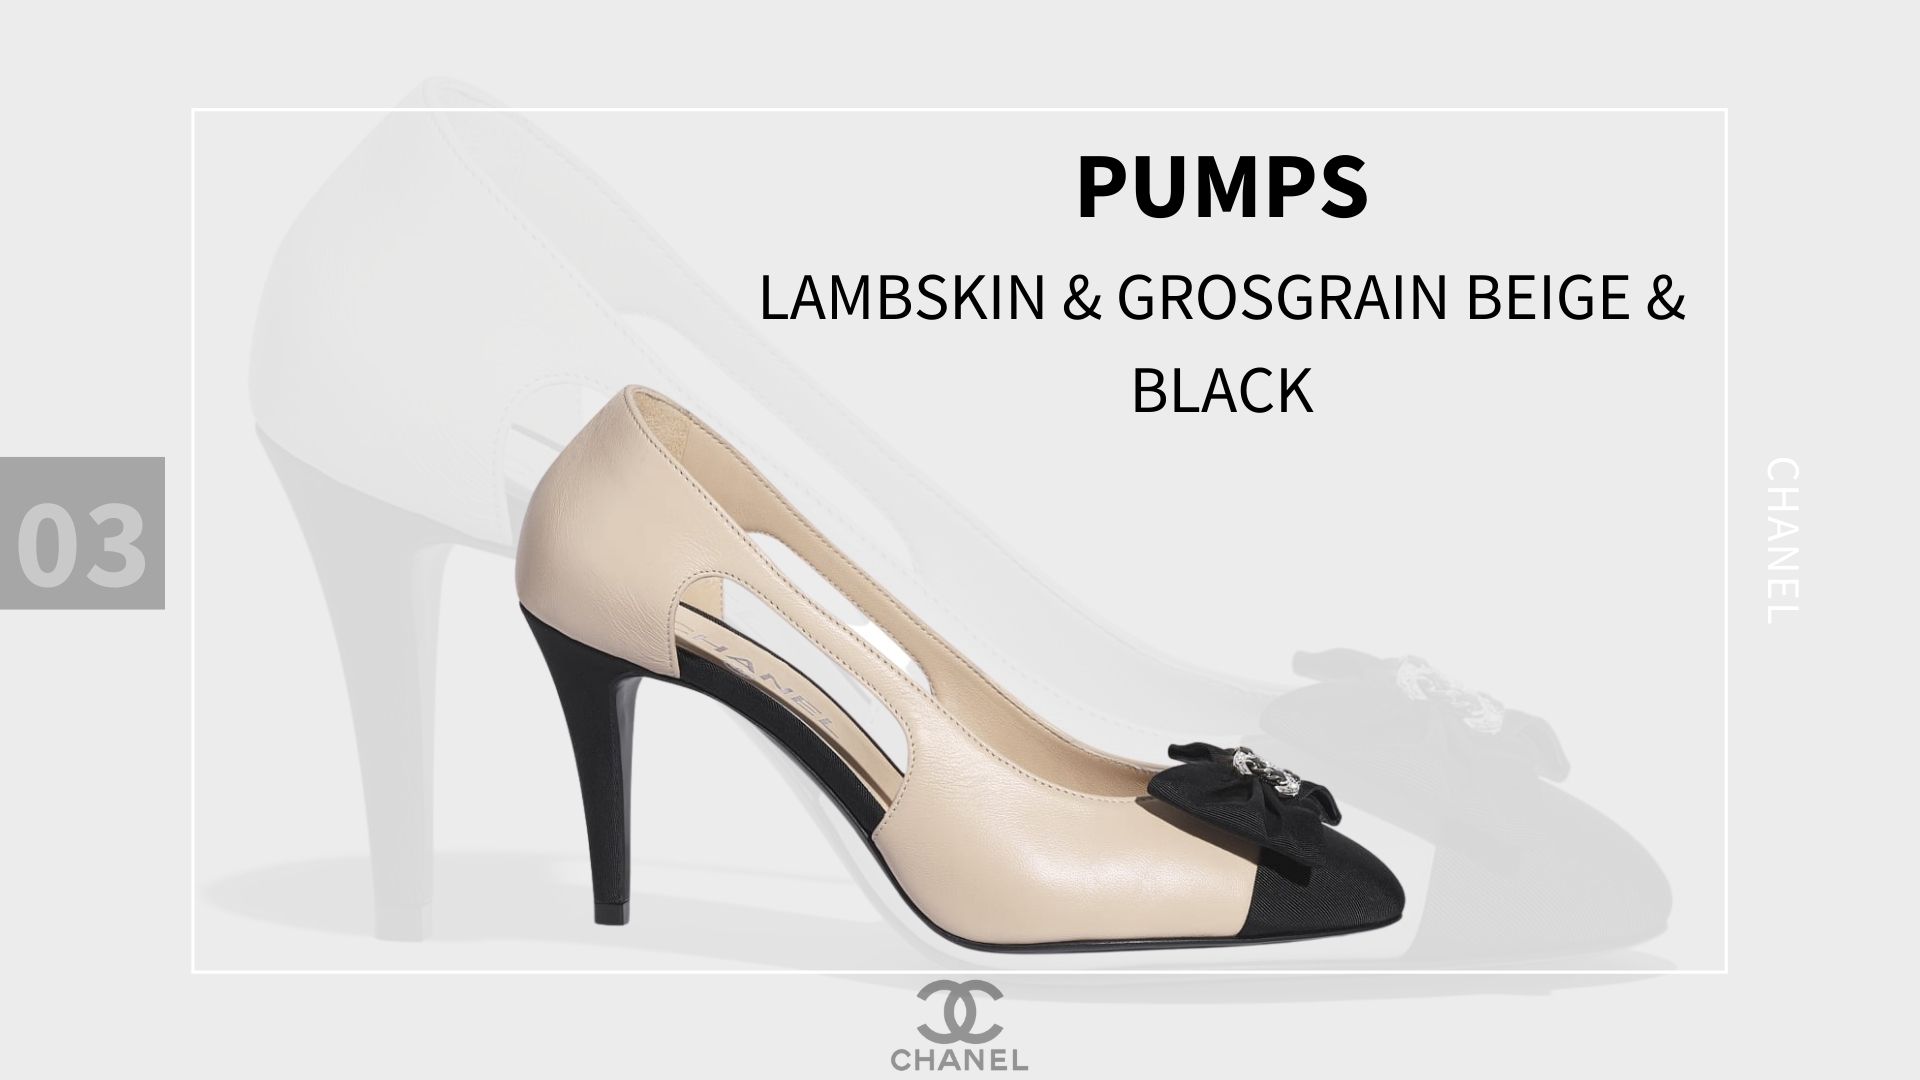 pumps Lambskin & Grosgrain Beige & Black 6 รองเท้าส้นสูง Chanel ที่ต้องมีไว้ติดตู้